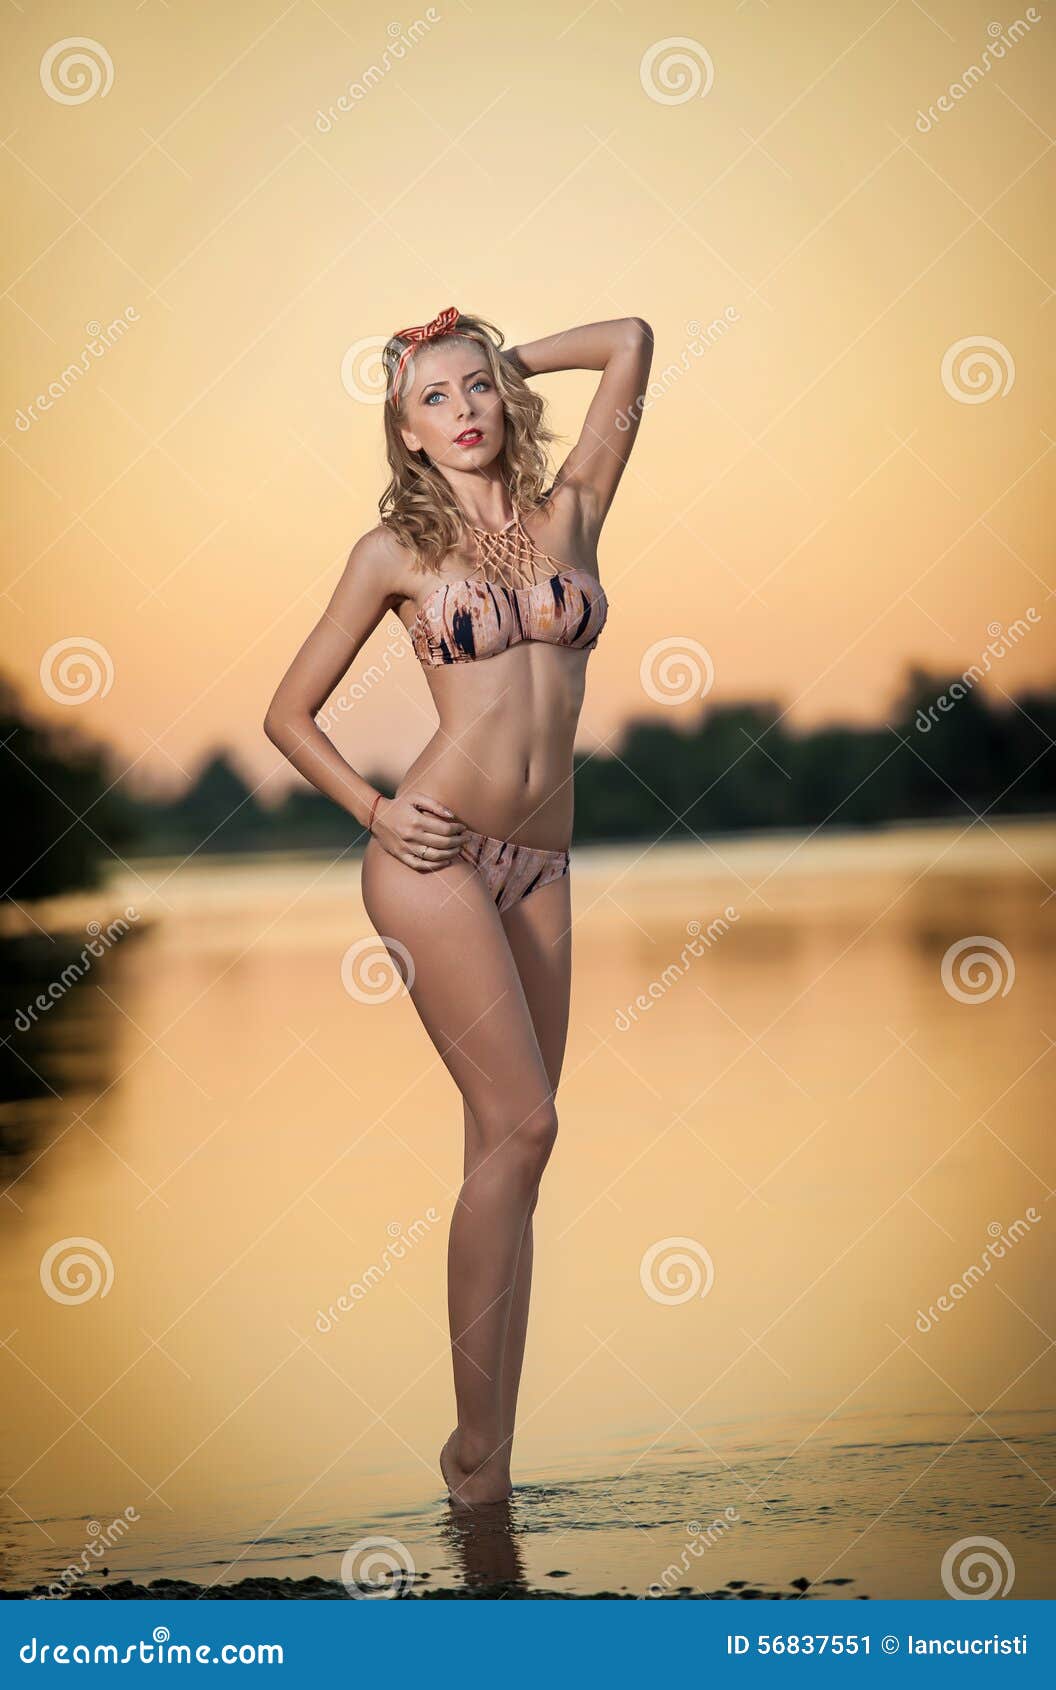 chet lavelle share nude beach babes videos photos